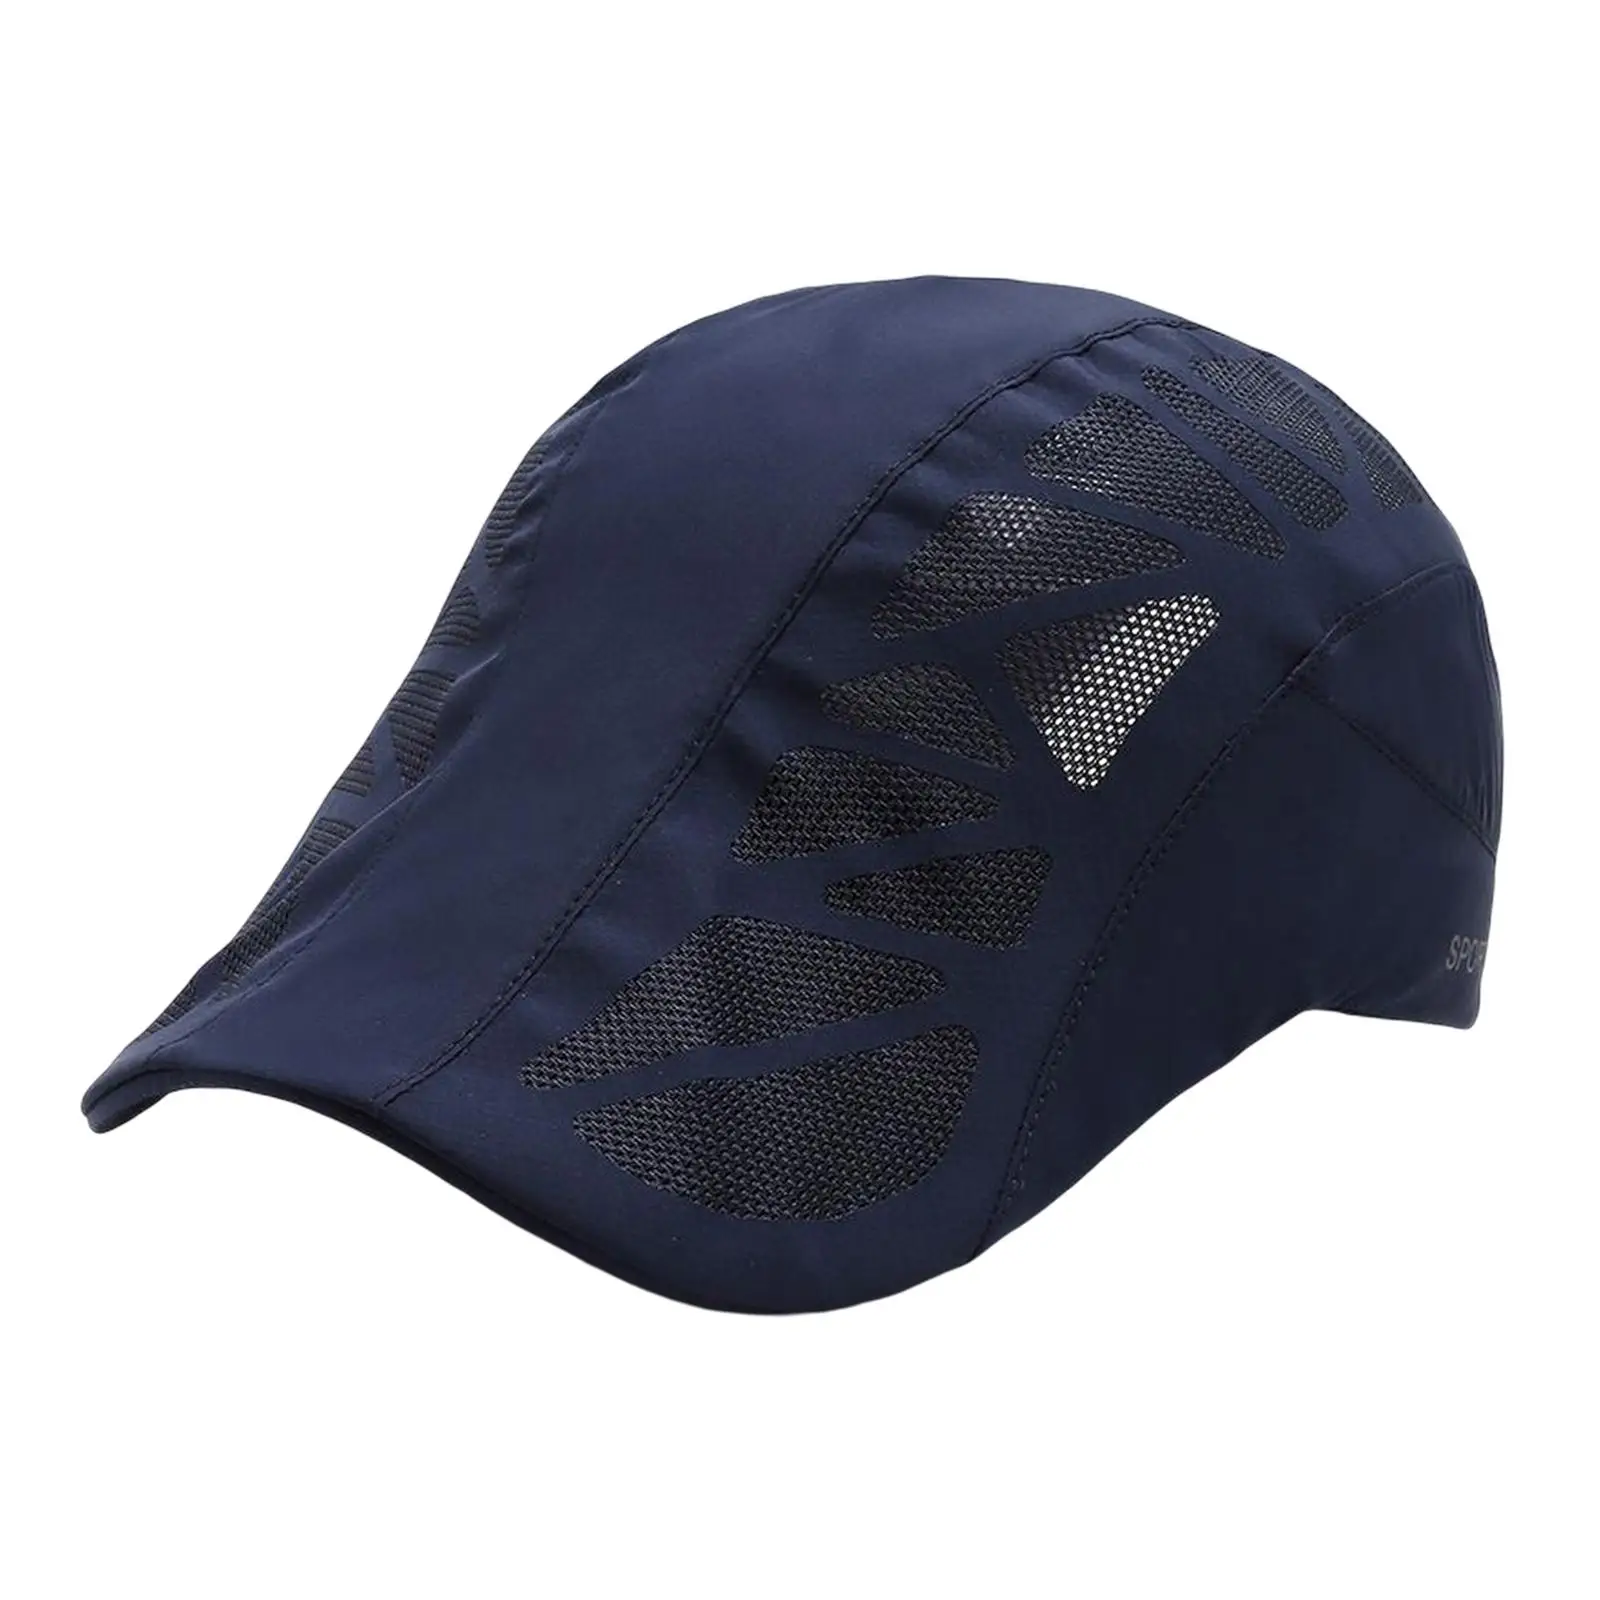 Men Mesh Visors Cotton Outdoor Golf Caps Summer Driver Hat Adjustable Fishing Caps Breathable Sun Hat Sports Baseball Caps